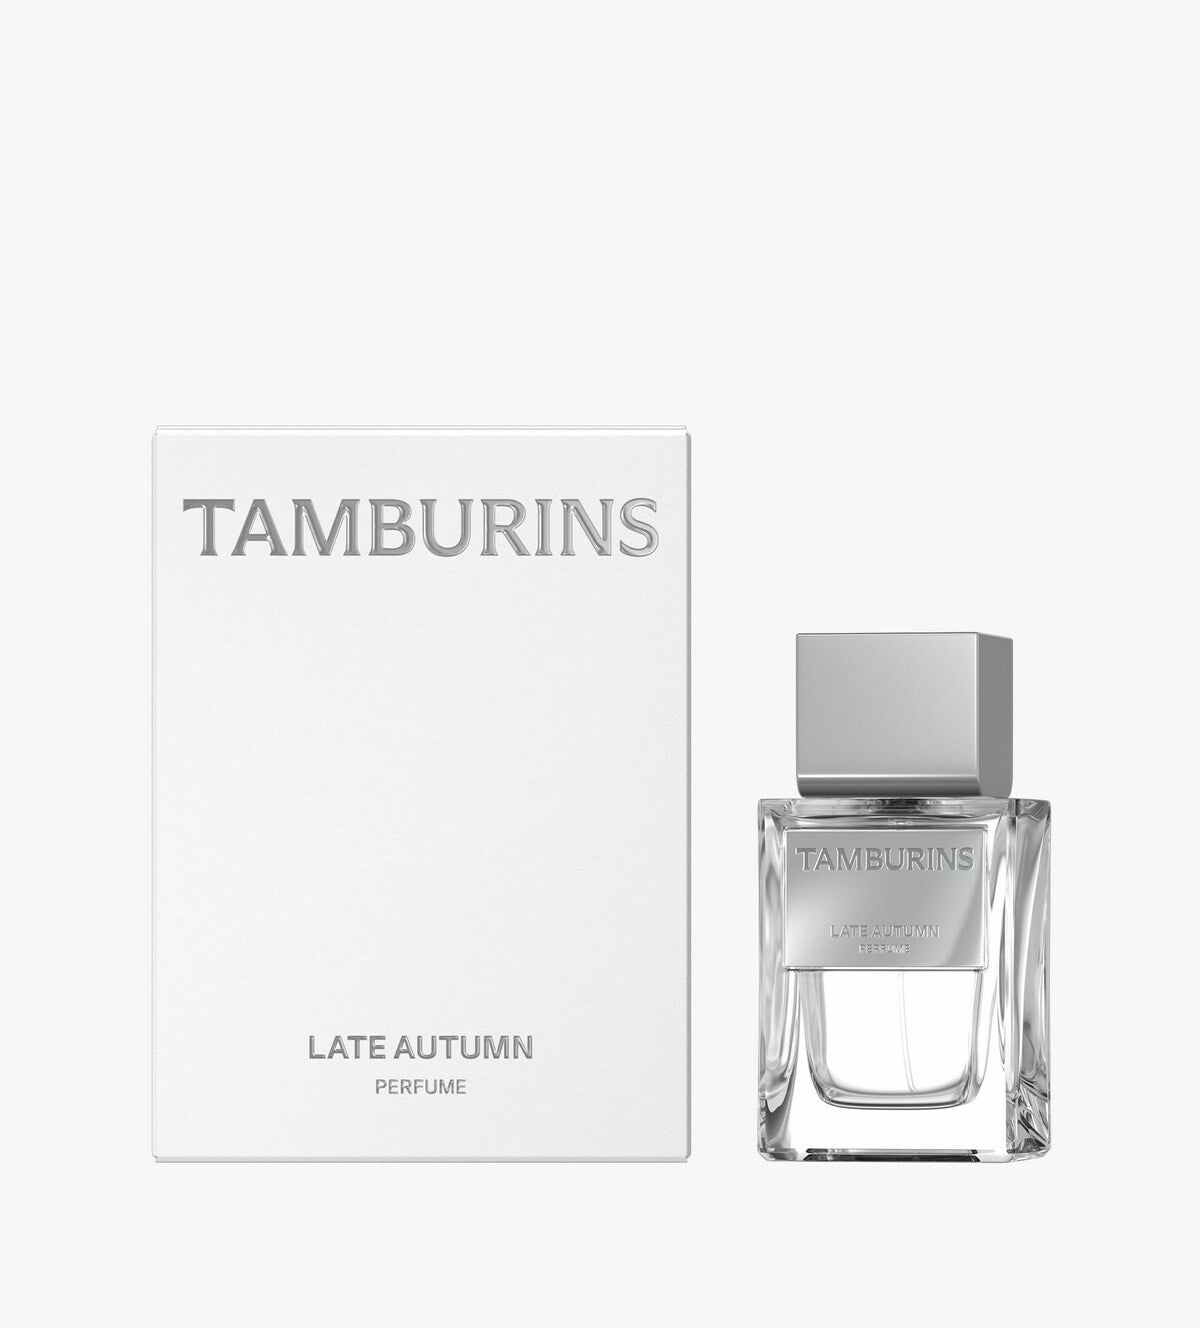 TAMBURINS Perfume finales de otoño 11 ml / 50ml